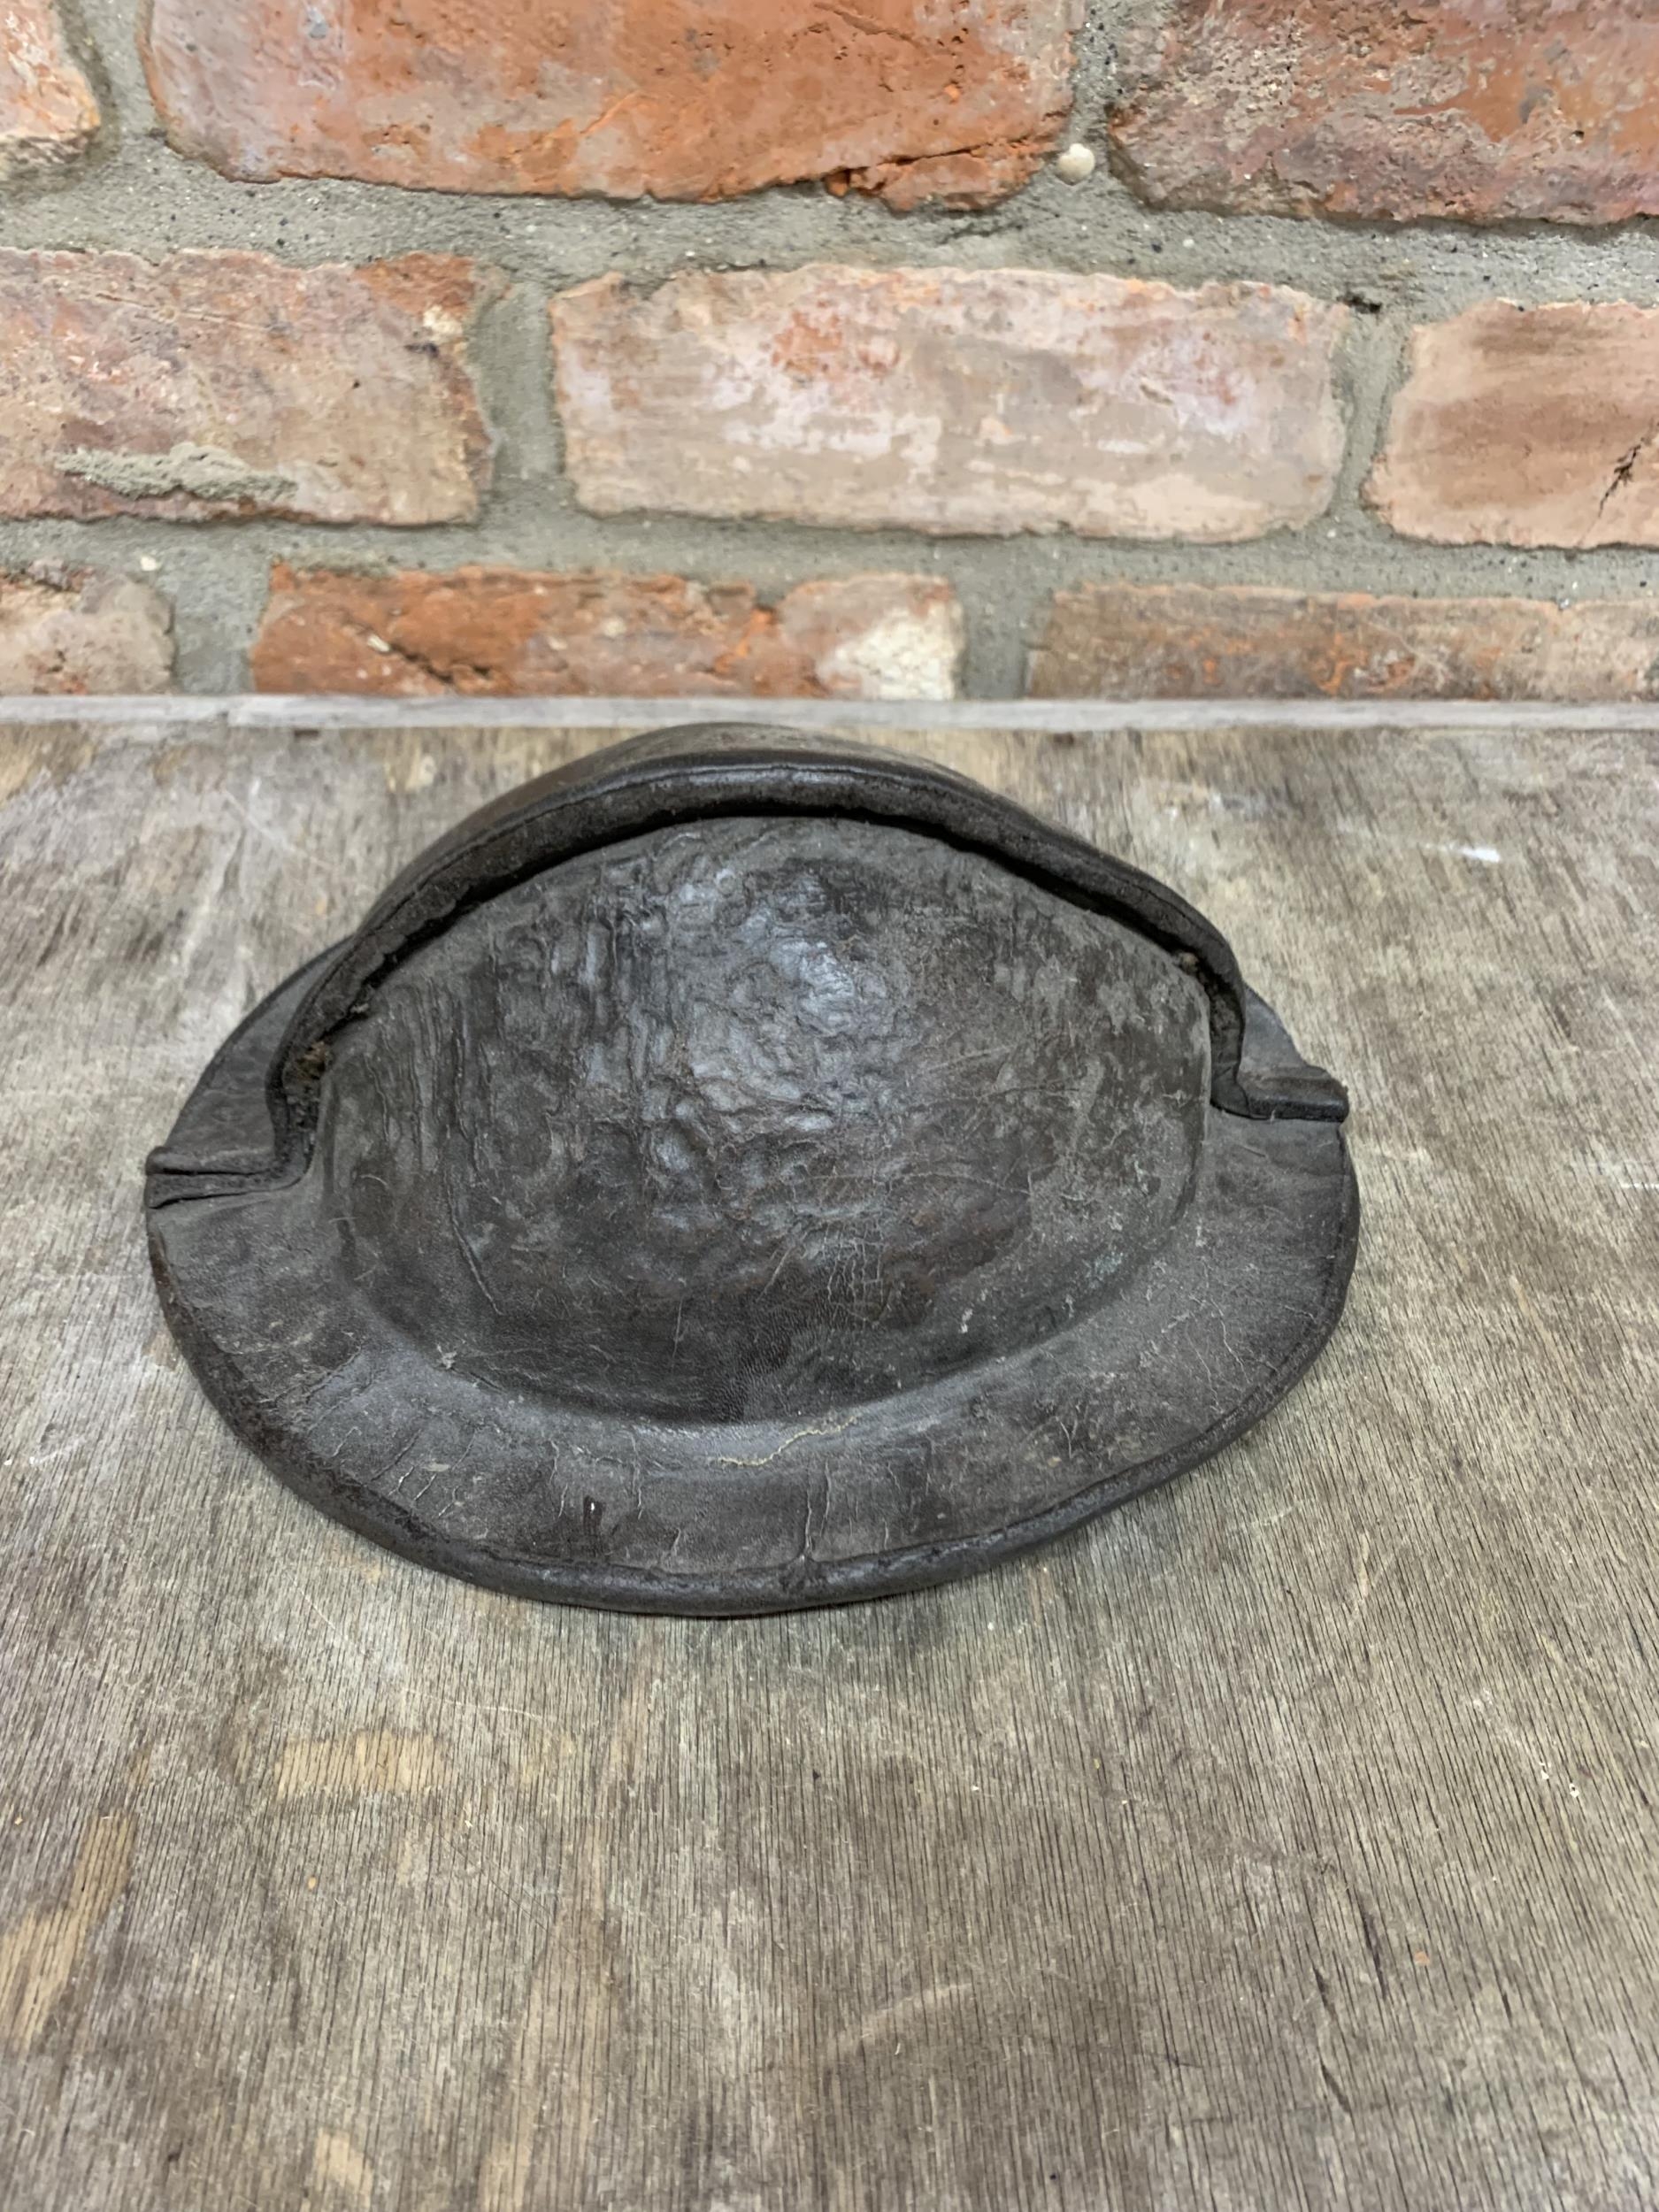 Antique leather tin miners helmet - Image 2 of 3